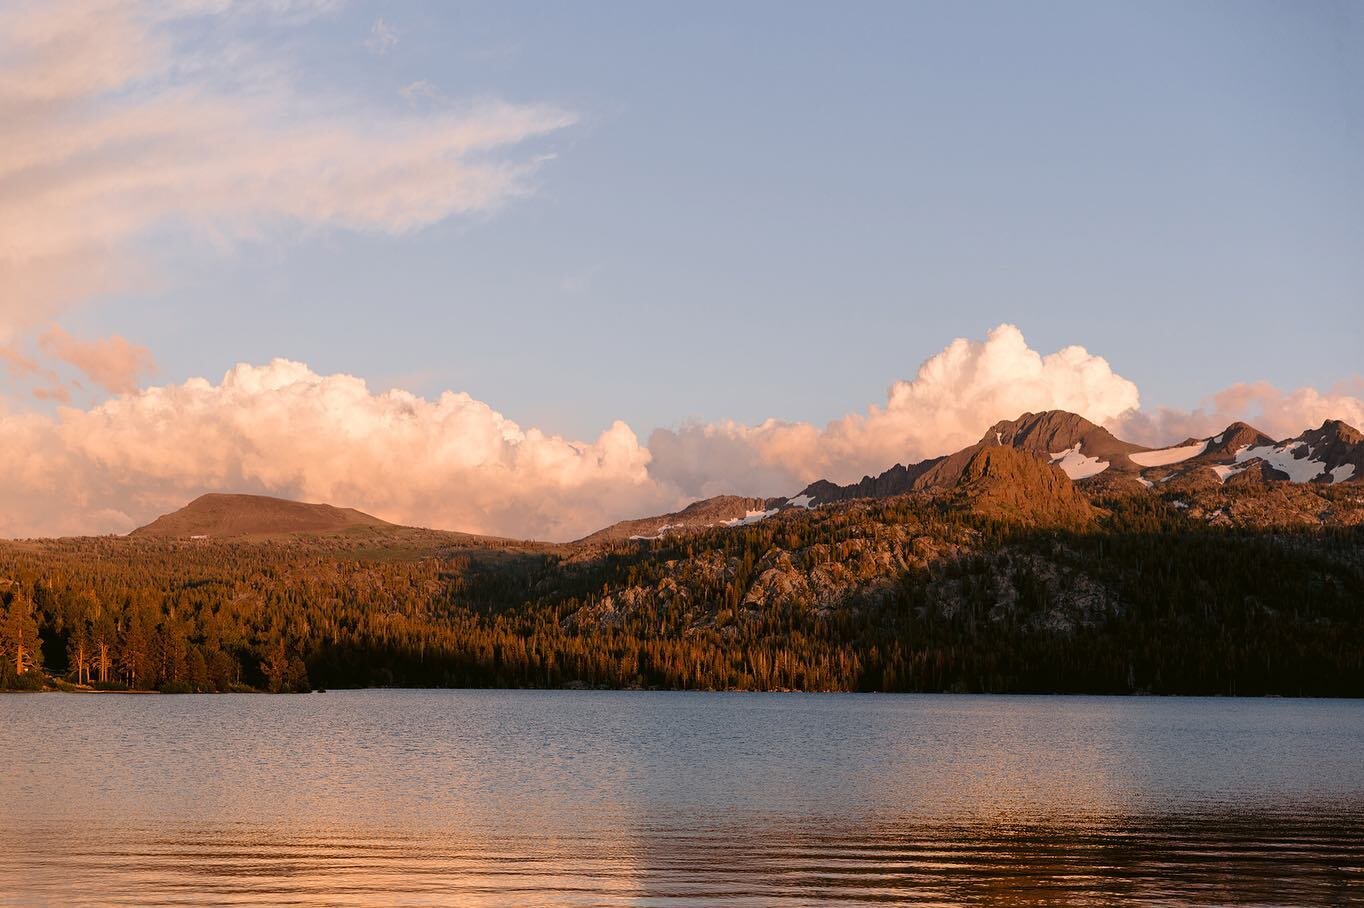 Magical weekend in the Sierras ✨